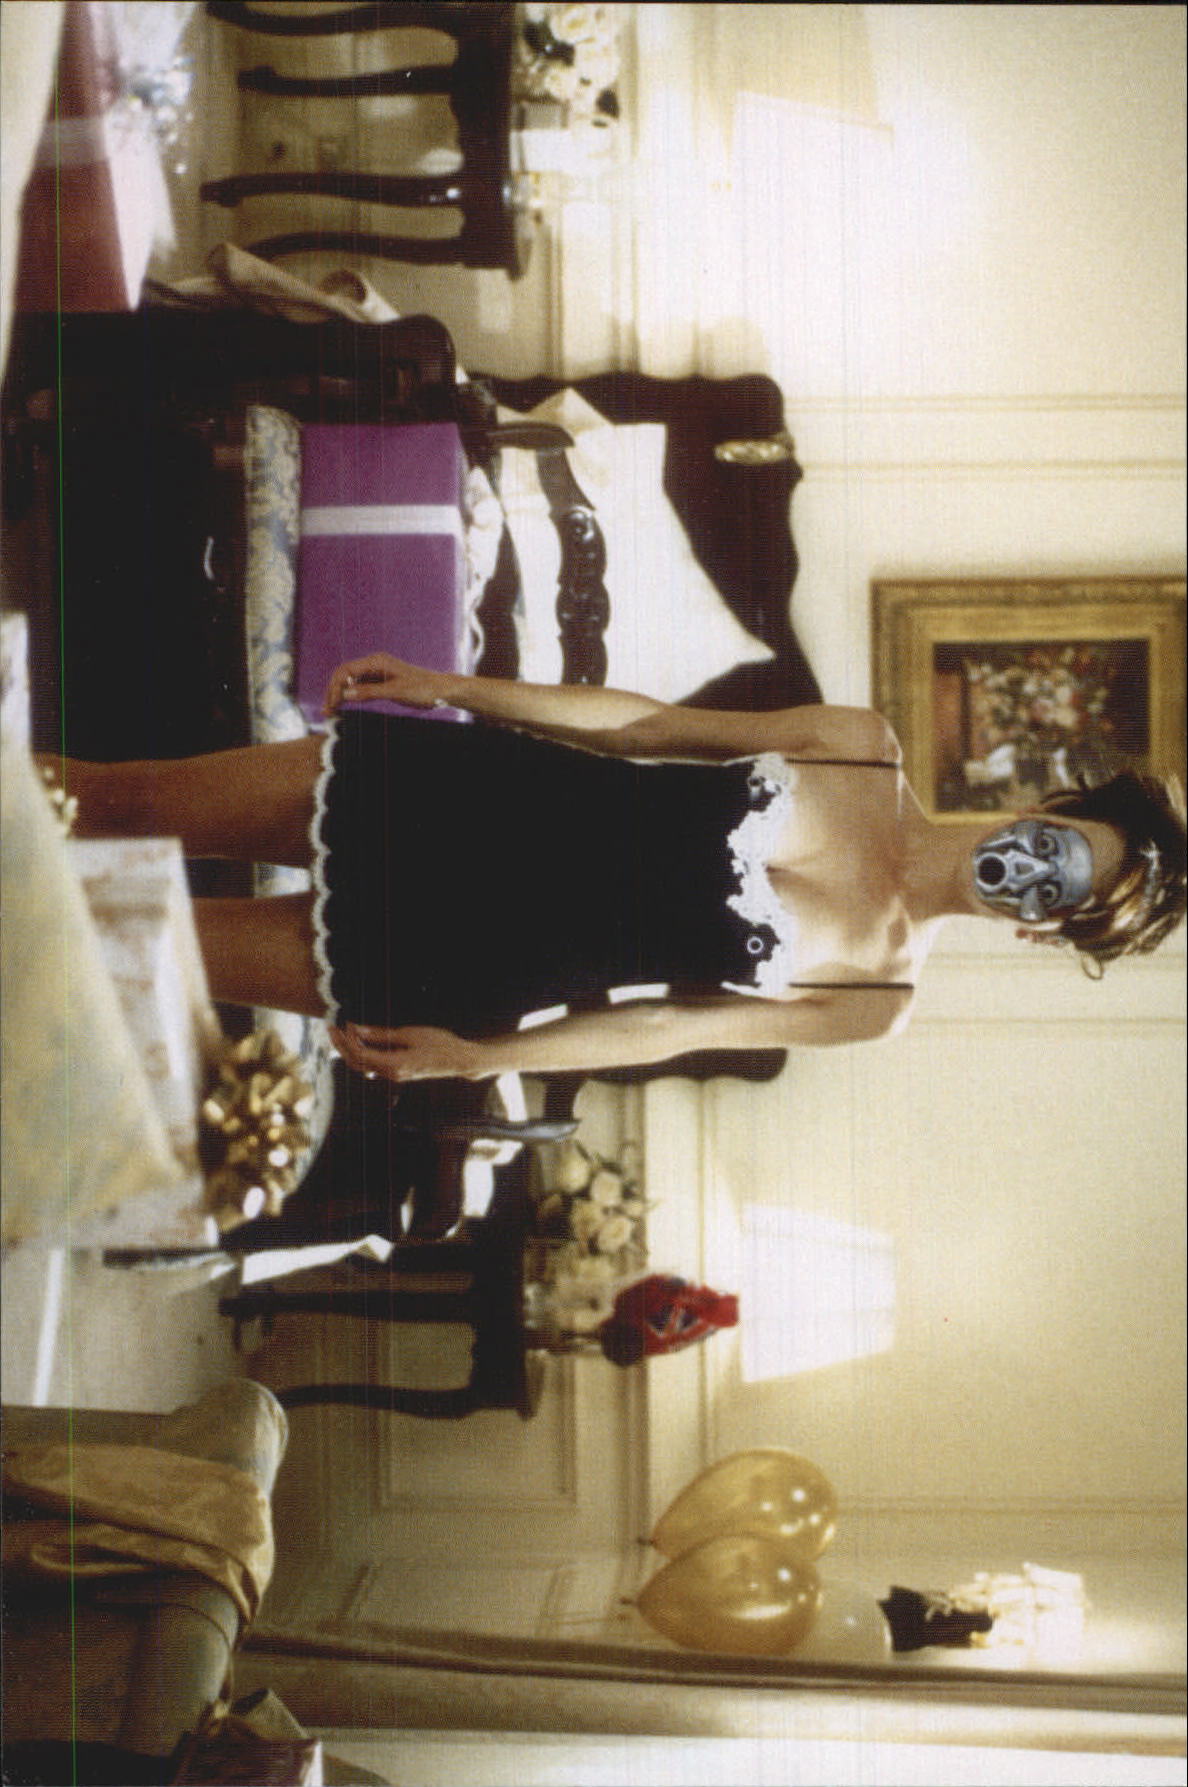 1999 Panini Austin Powers Photocards #57 Robo-face in black